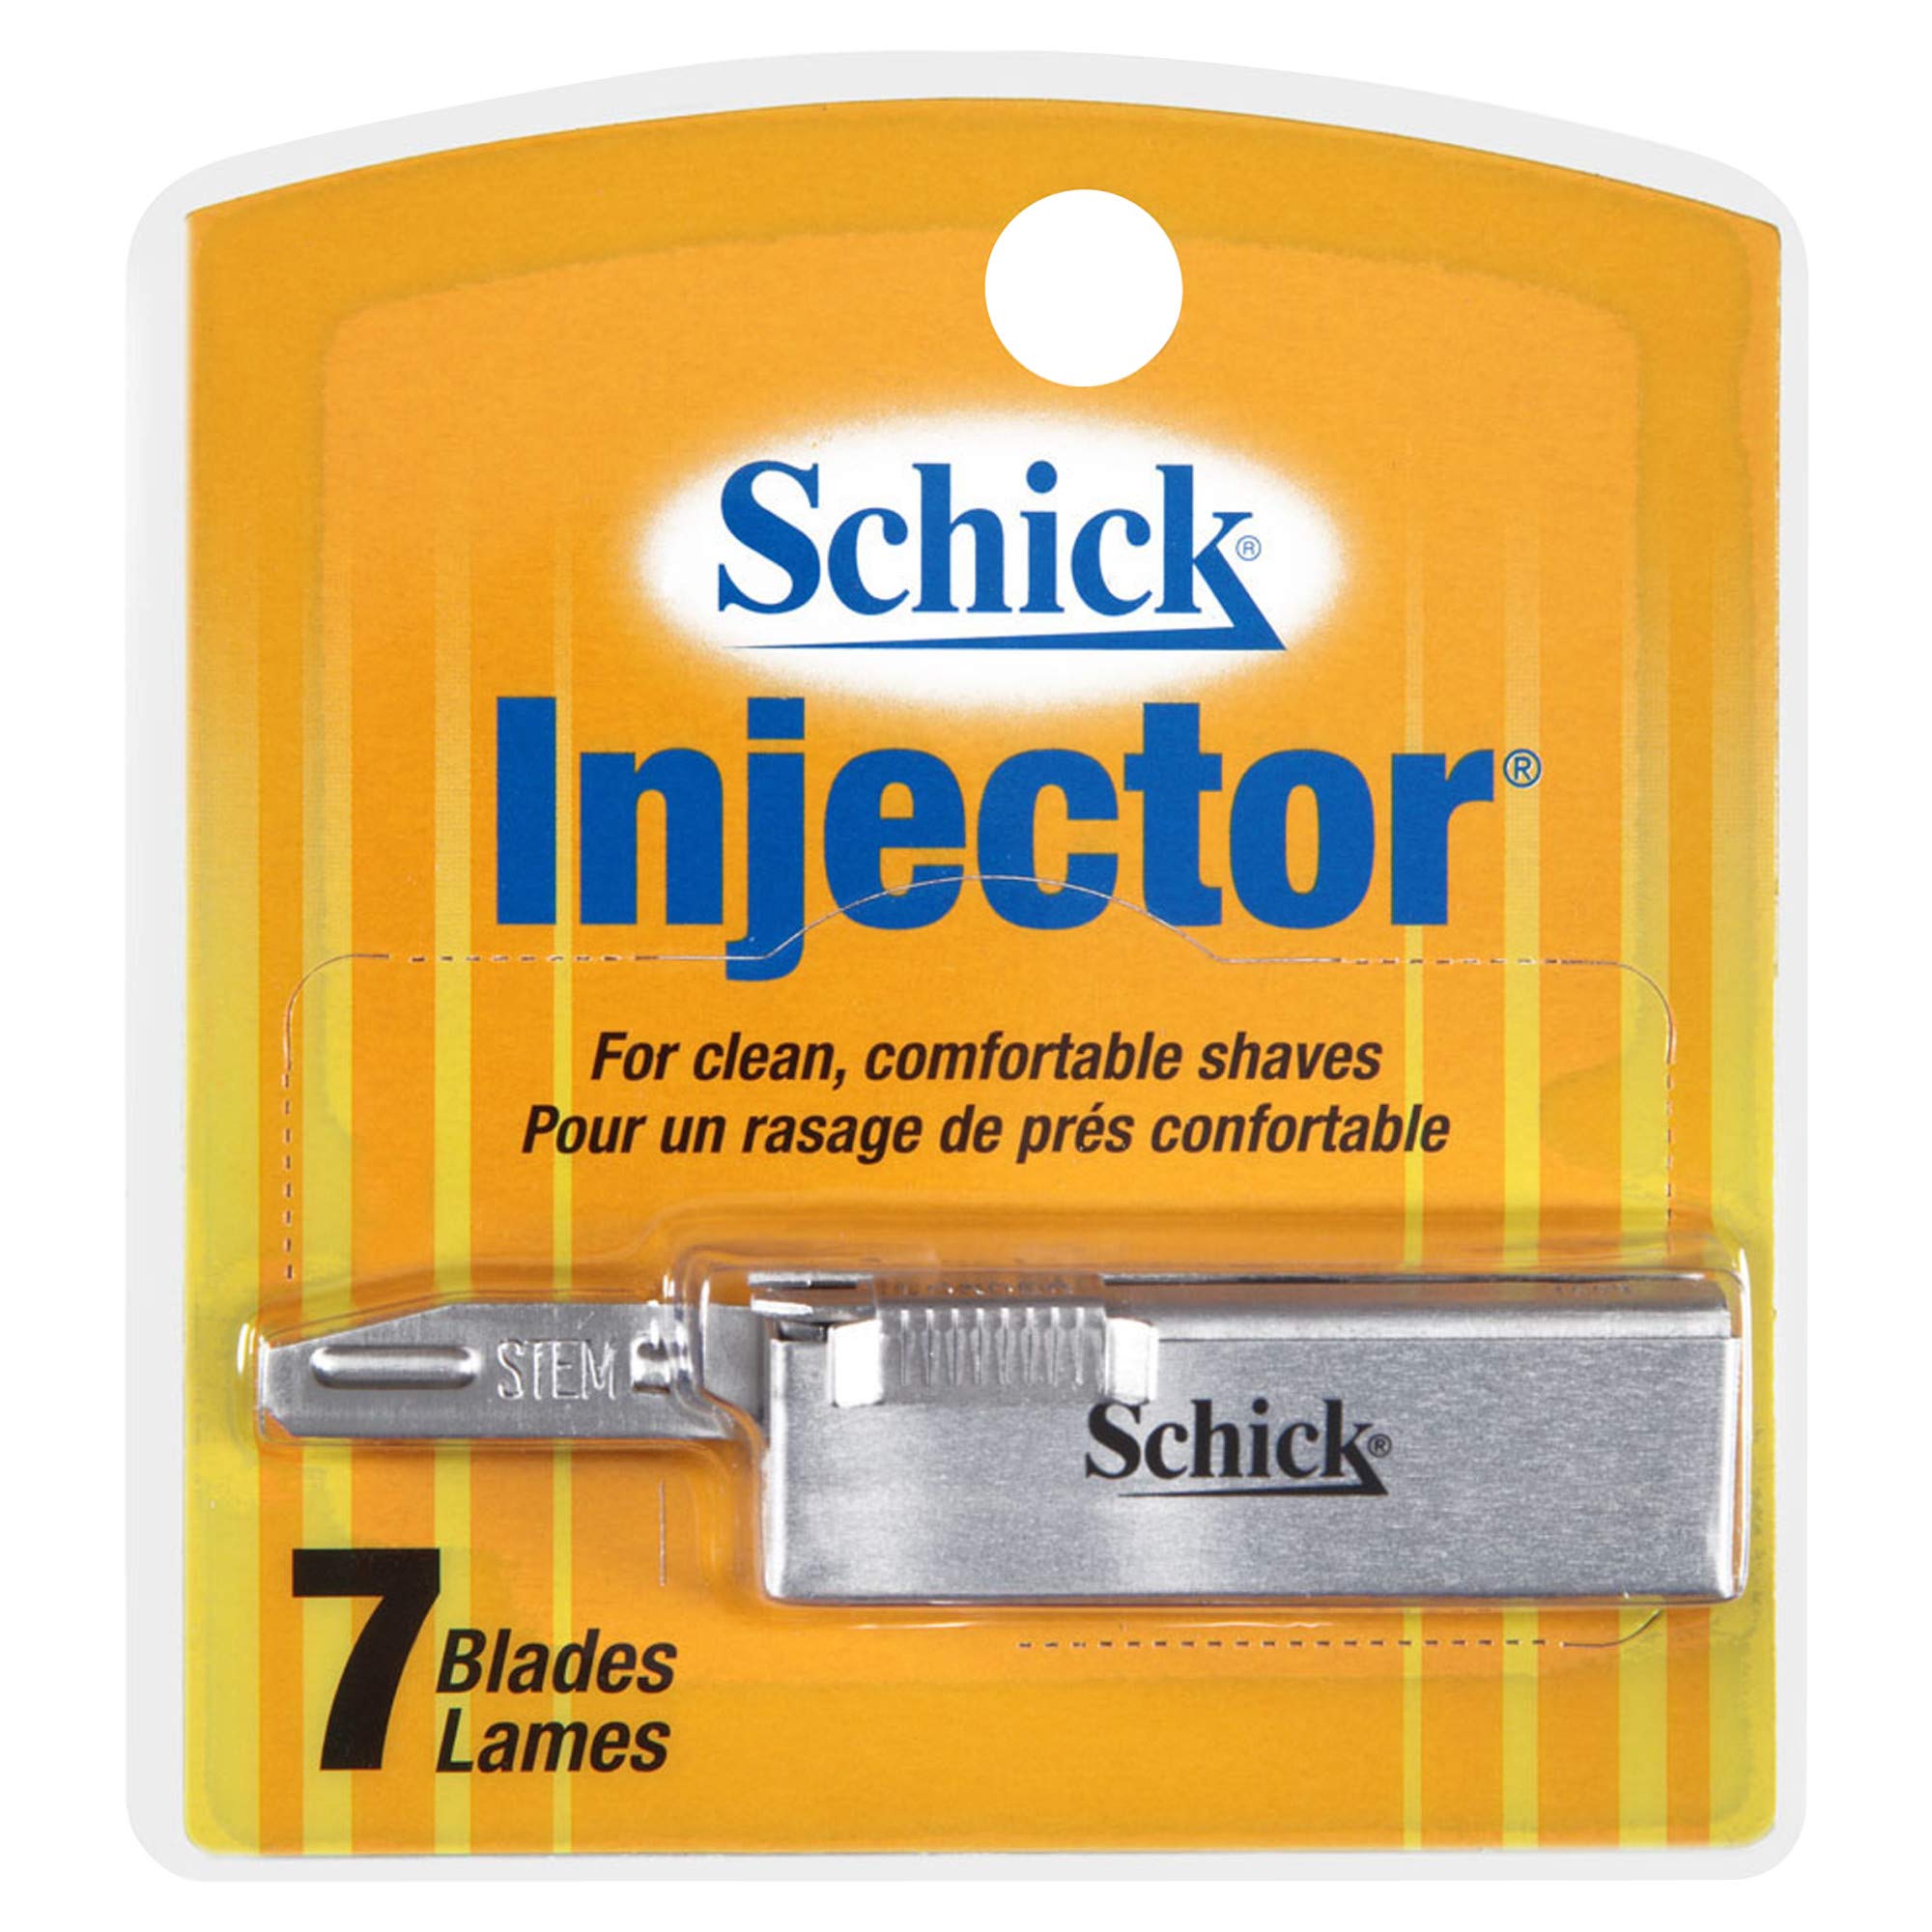 Schick Plus Injector Blades - 7 ct